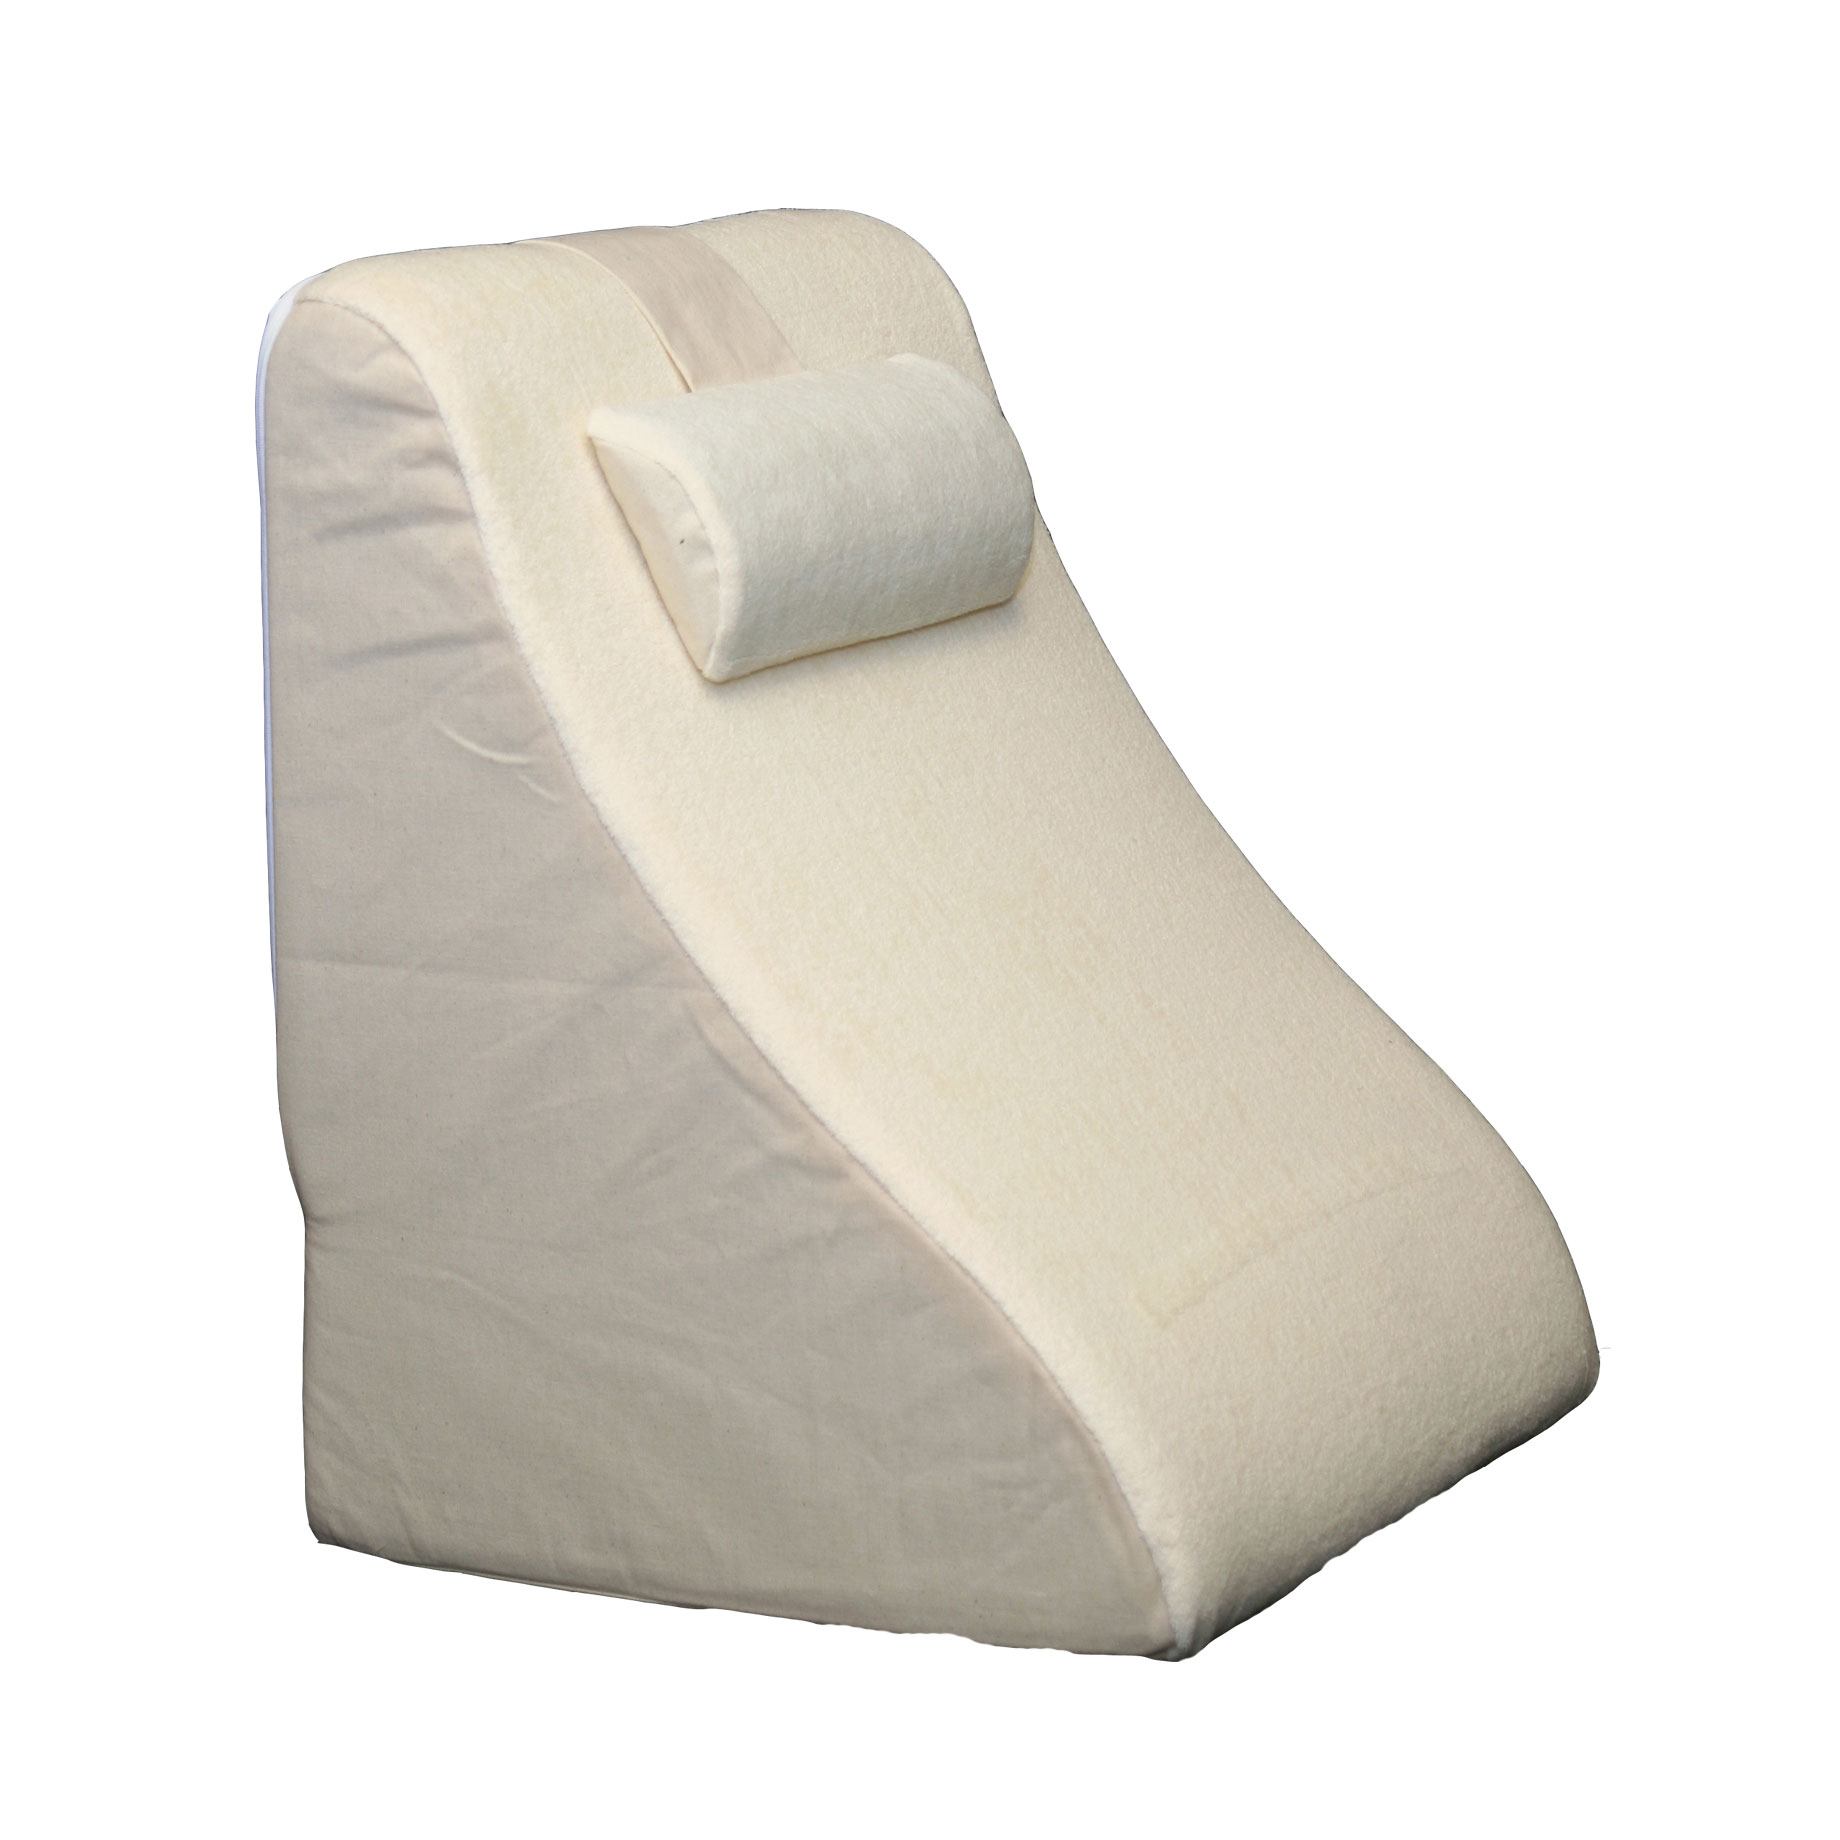 kmart inflatable bath pillow